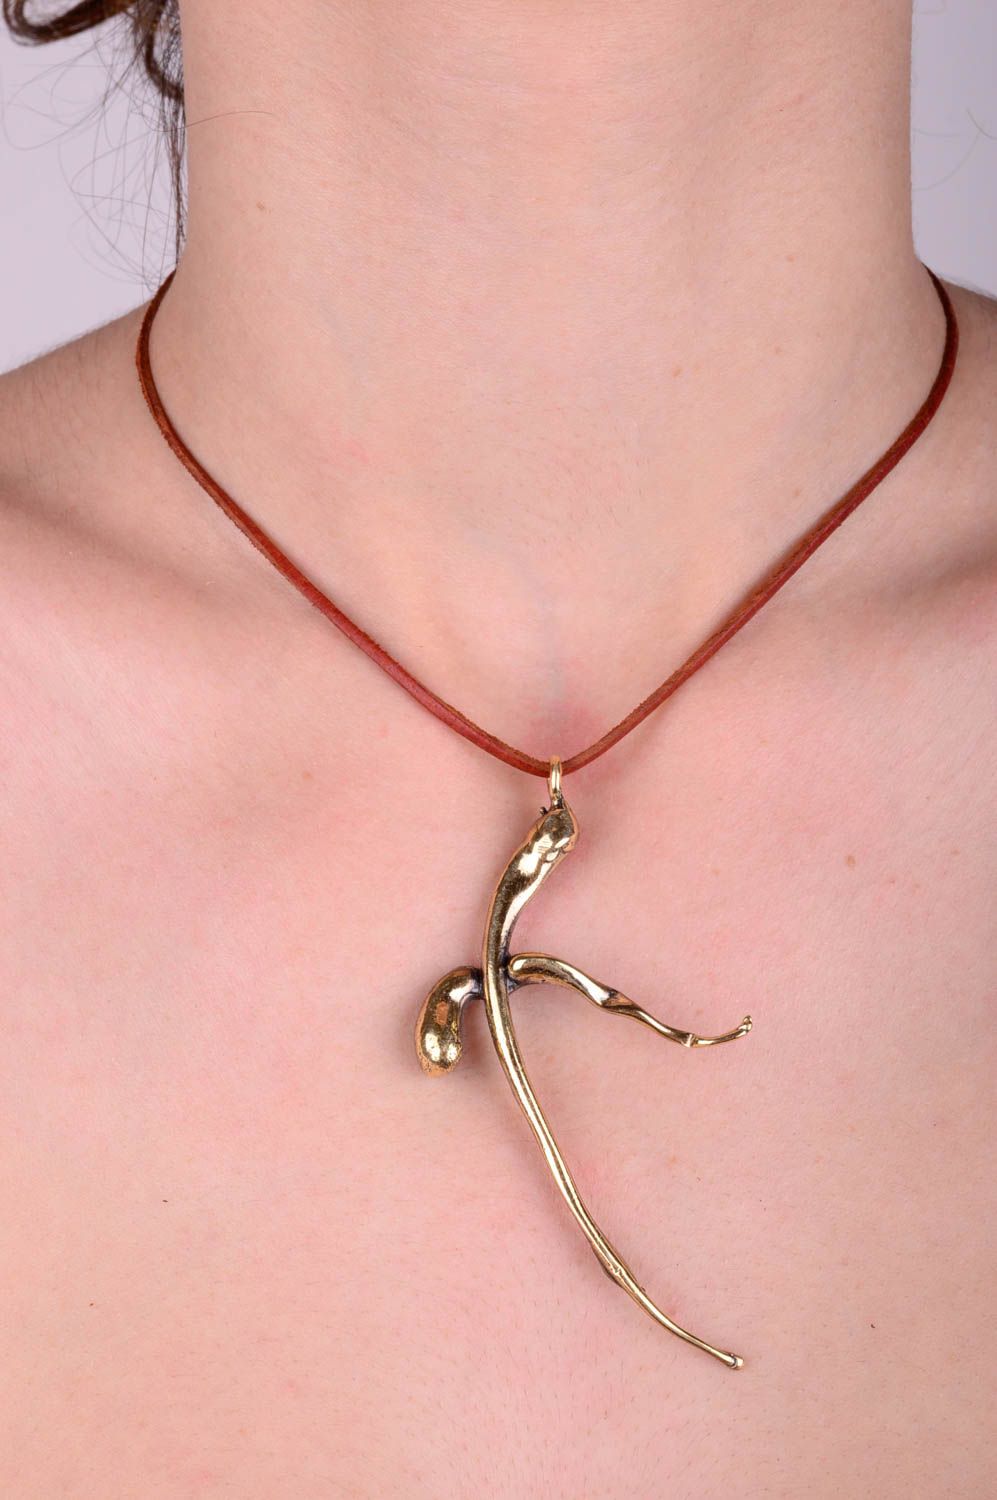 Unusual handmade brass neck pendant designer jewelry fashionable accessories photo 3